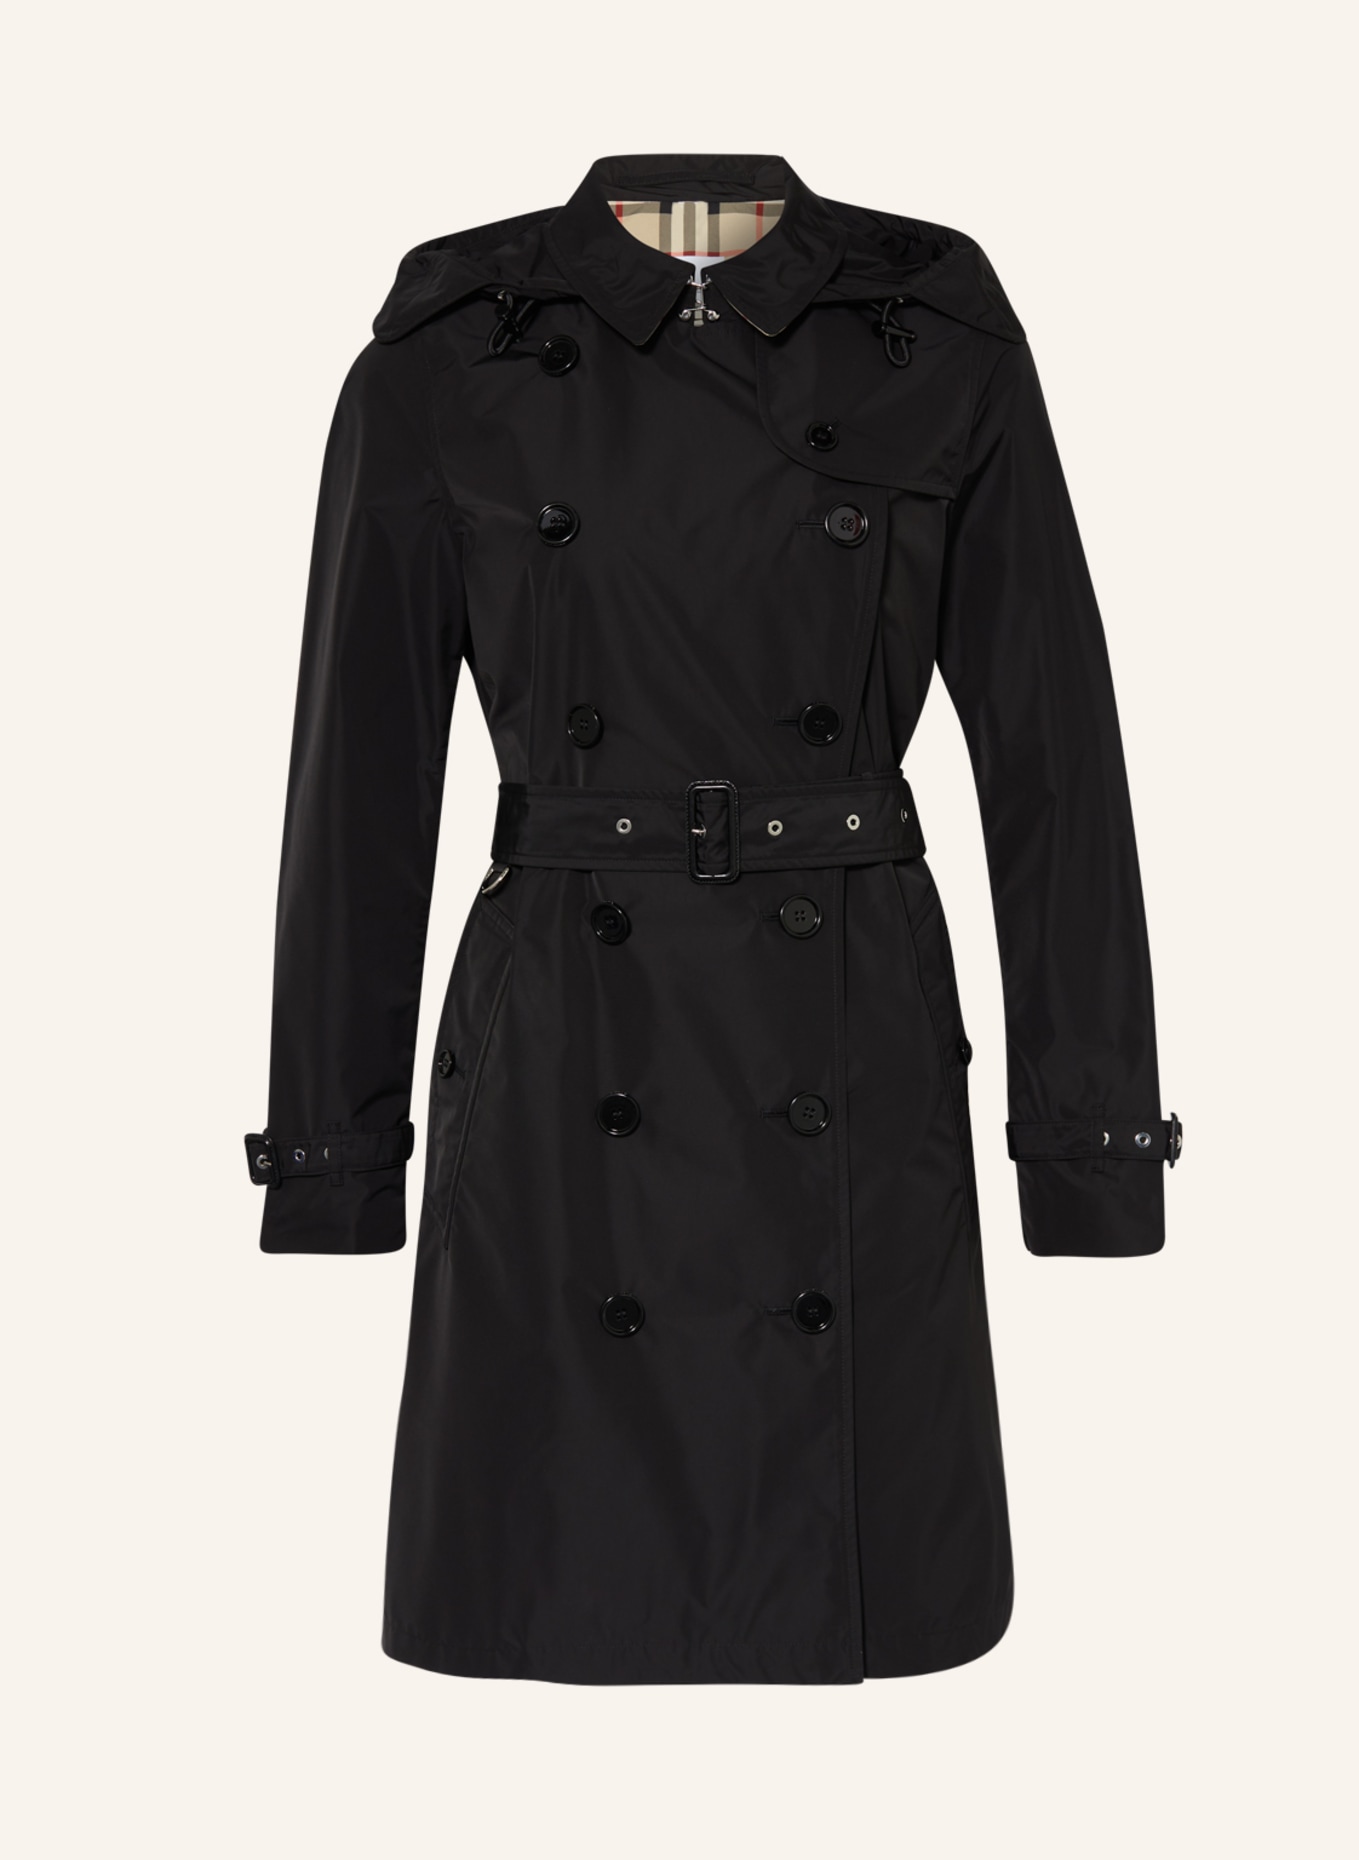 BURBERRY coat with detachable hood in black